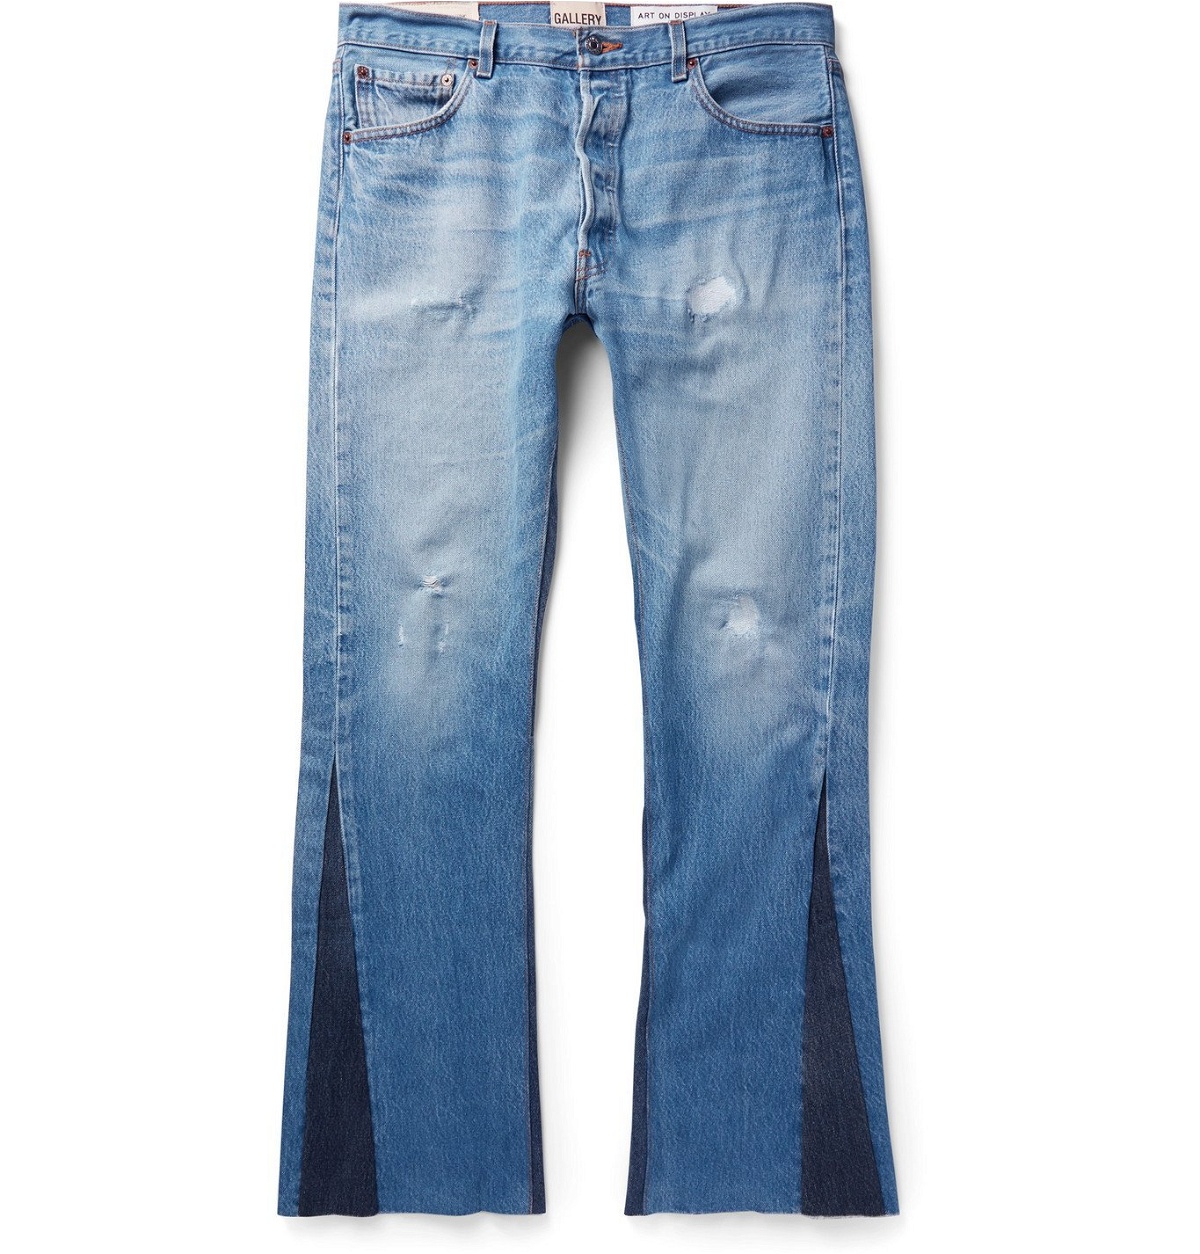 Gallery Dept. - Slim-Fit Two-Tone Distressed Denim Jeans - Blue 